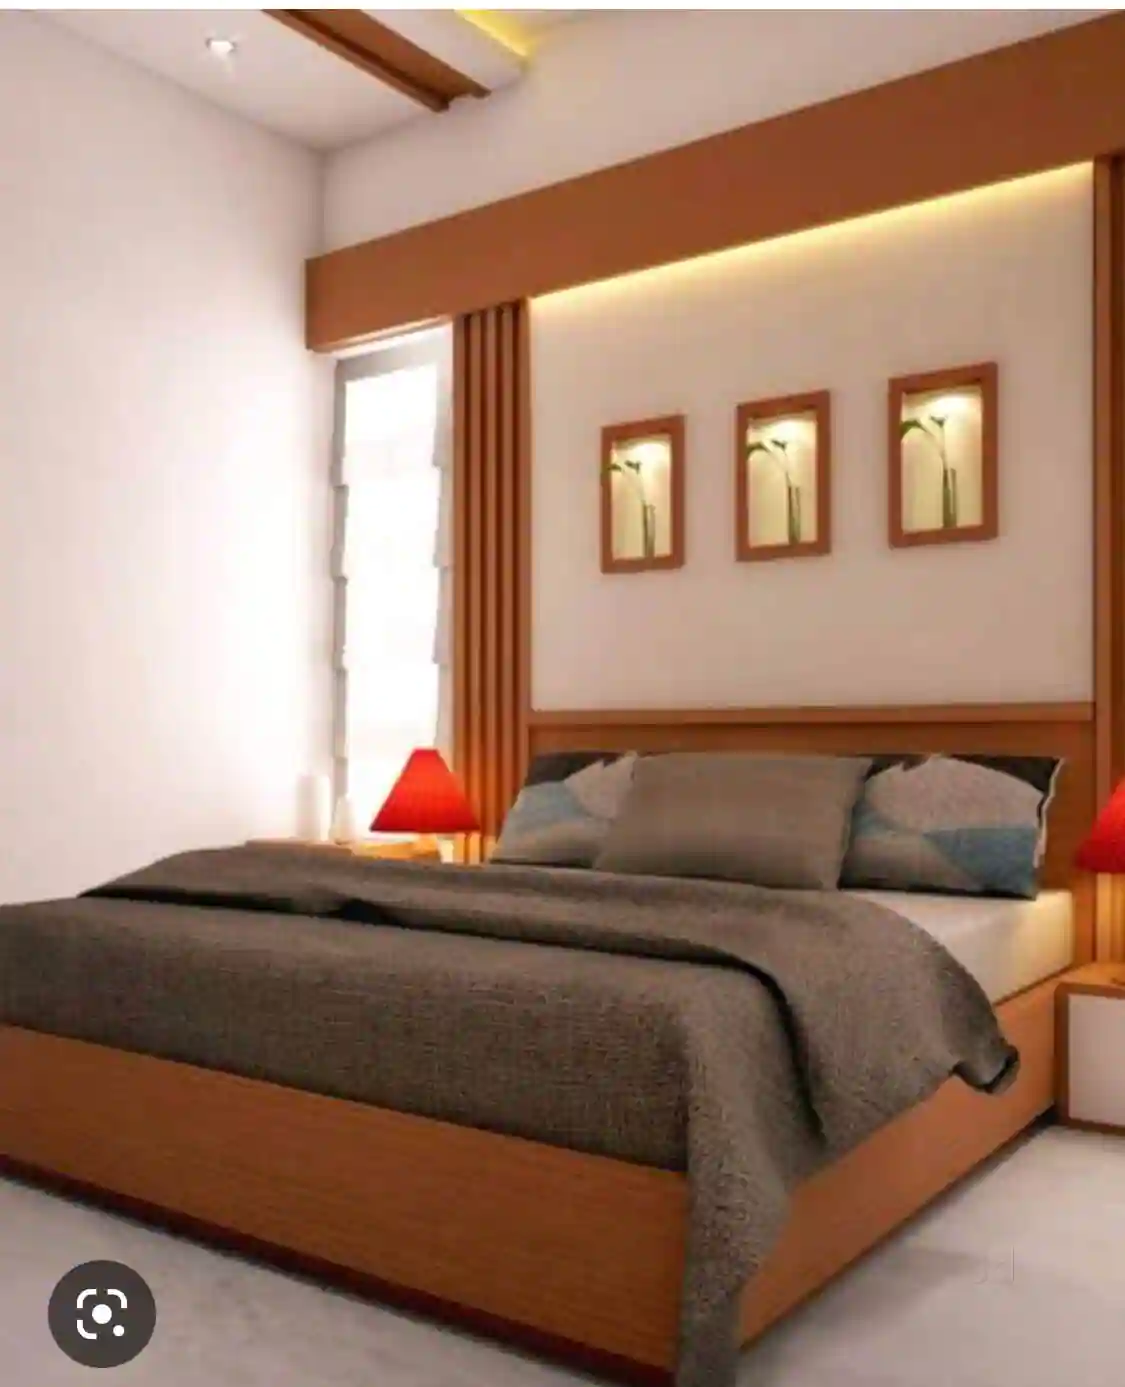 ai bedroom design before